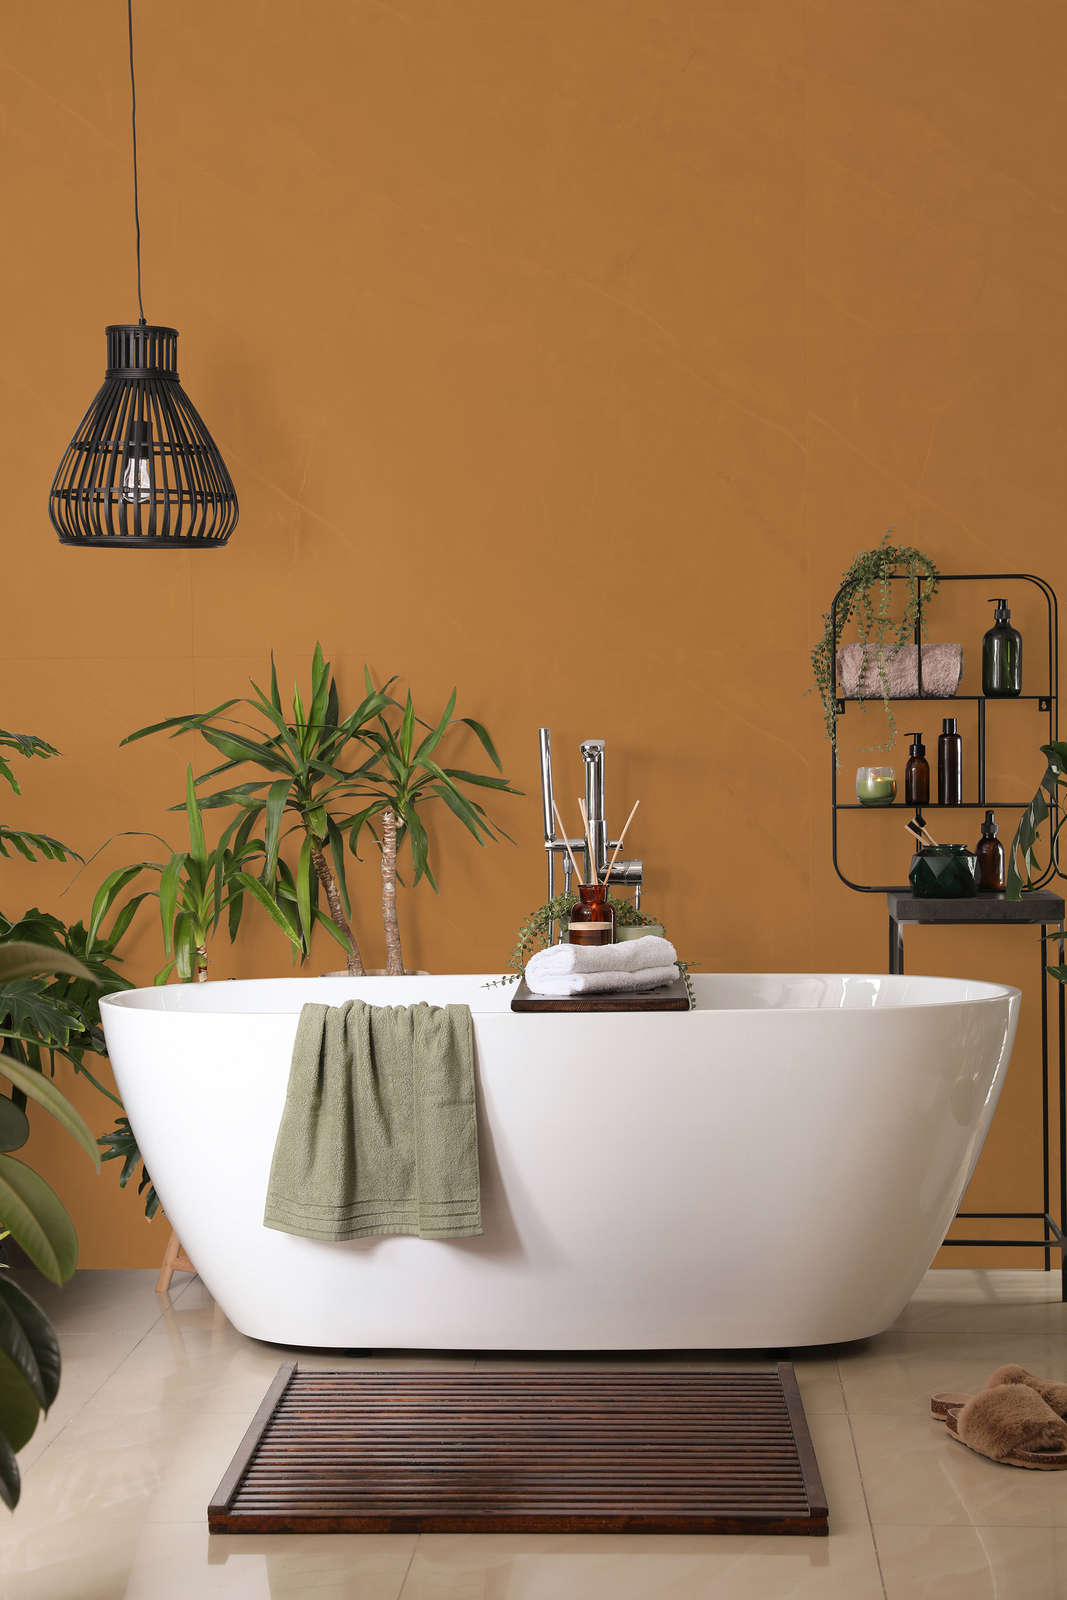             Peinture murale Premium brun clair intense »Beige Orange/Sassy Saffron« NW814 – 5 litres
        